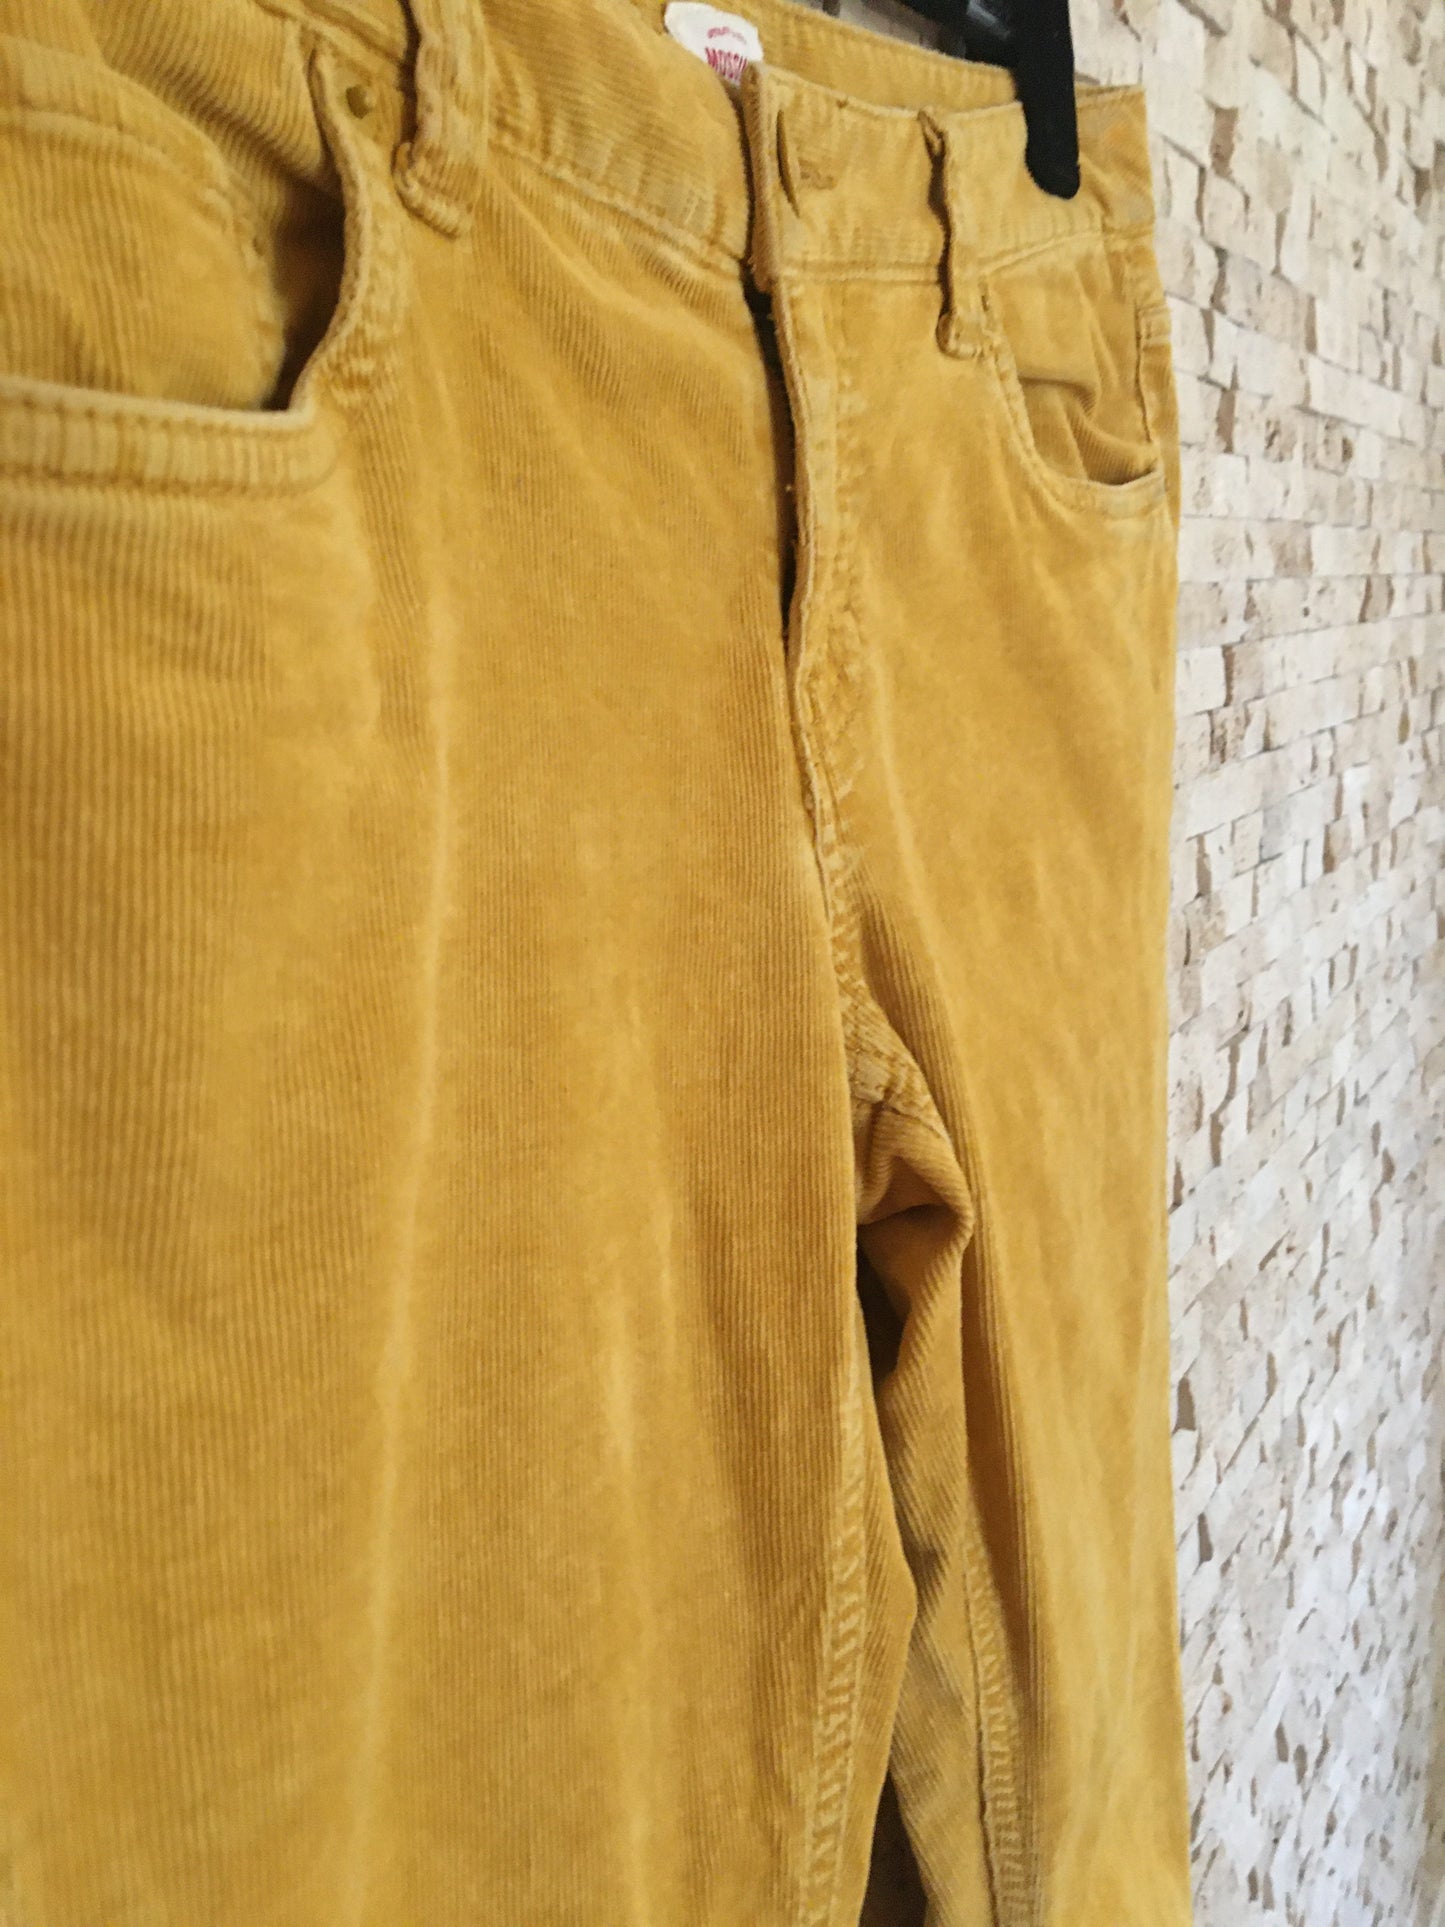 Yellow Corduroy Jeans